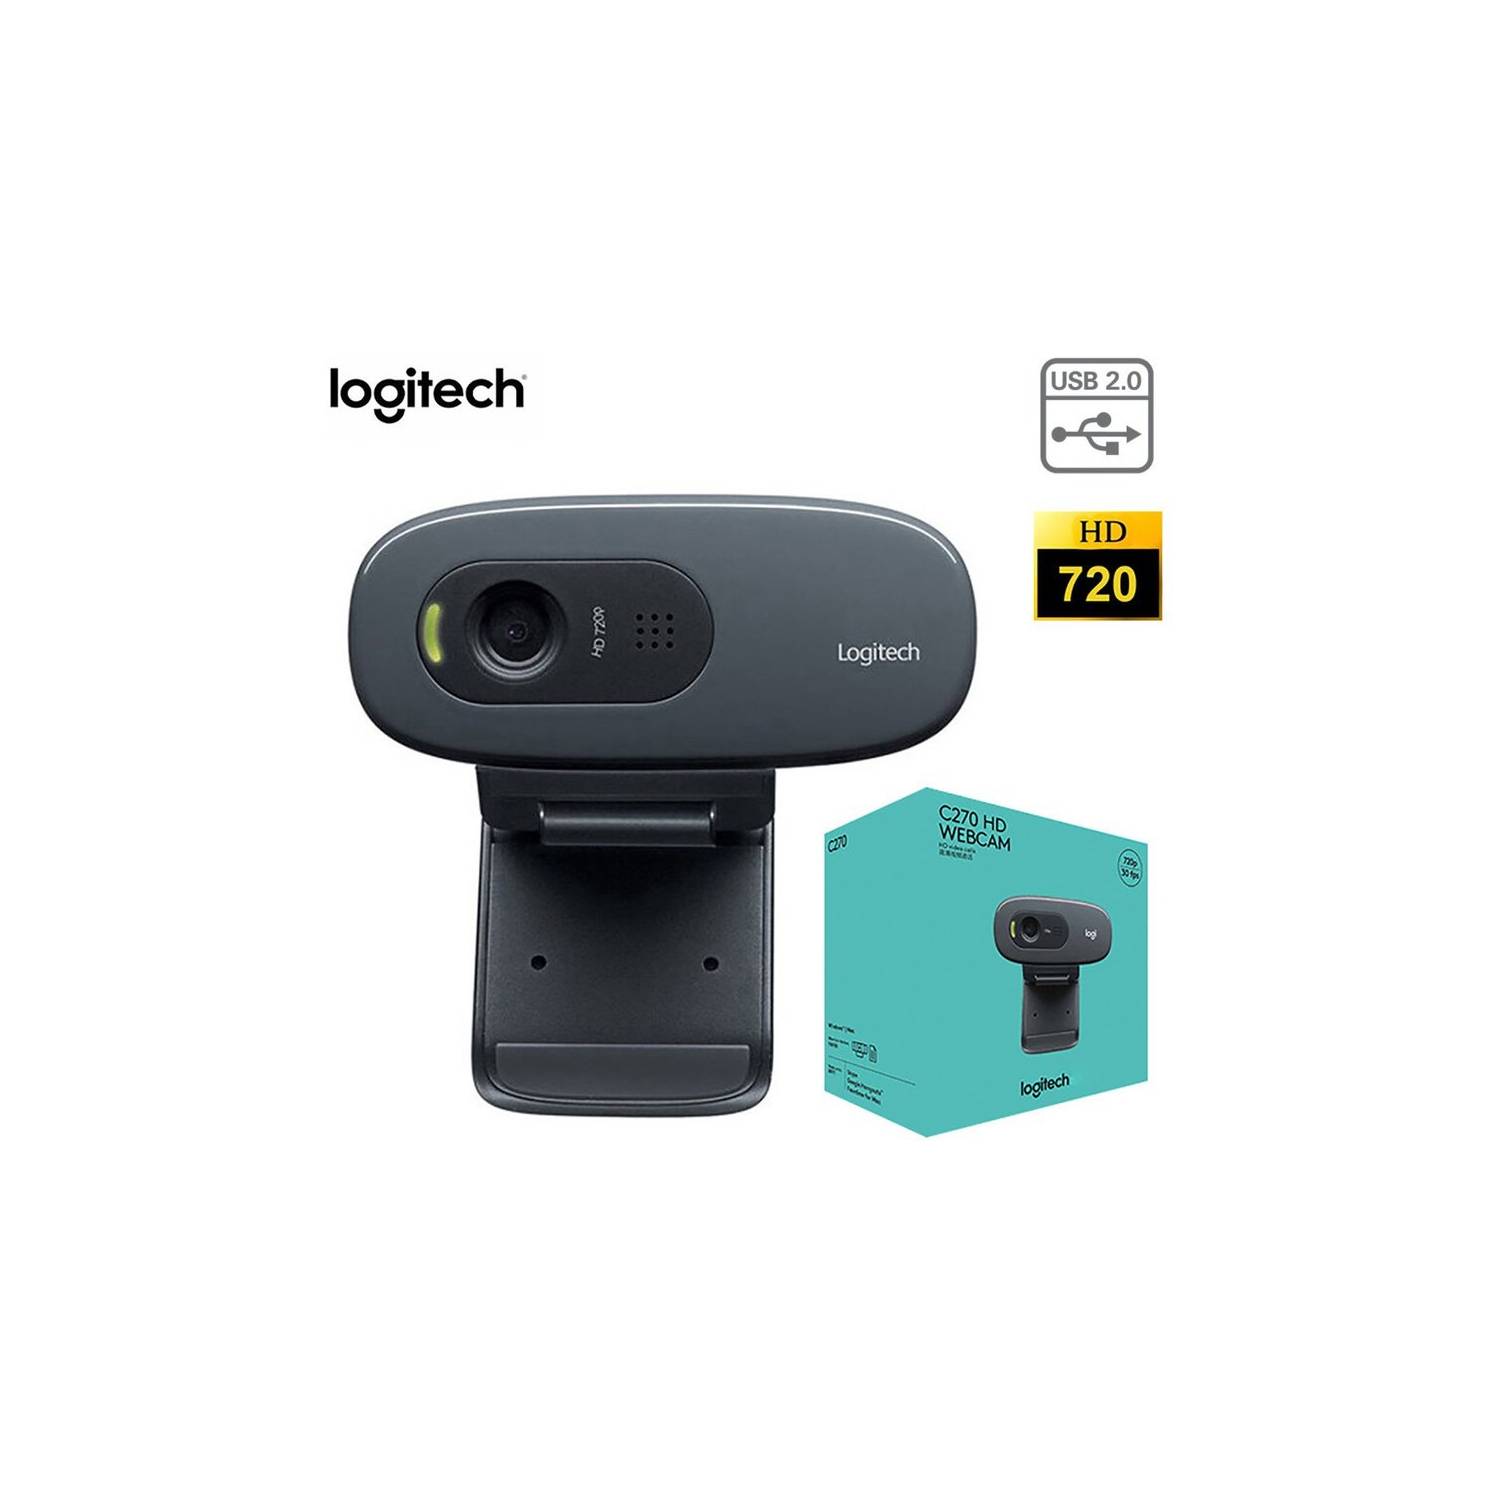 Logitech webcam c270 3mp 1280 x 720 pixeles usb 2.0 negro LOGITECH falabella.com